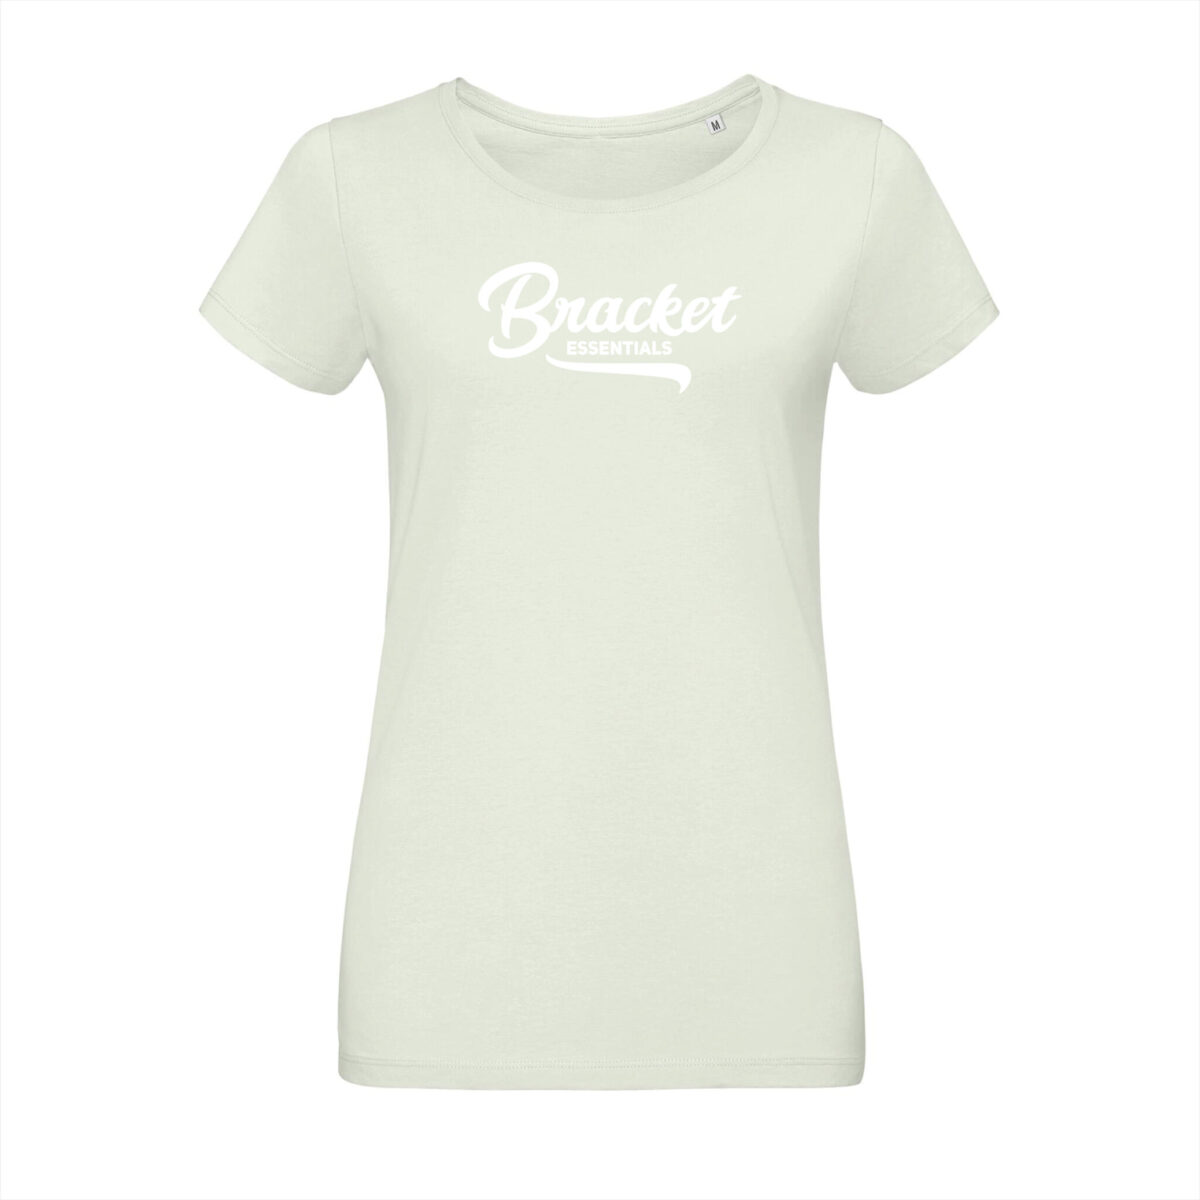 instinct radicaal onderdak Bracket Essentials T-shirt Mint Groen Dames - Bracket official